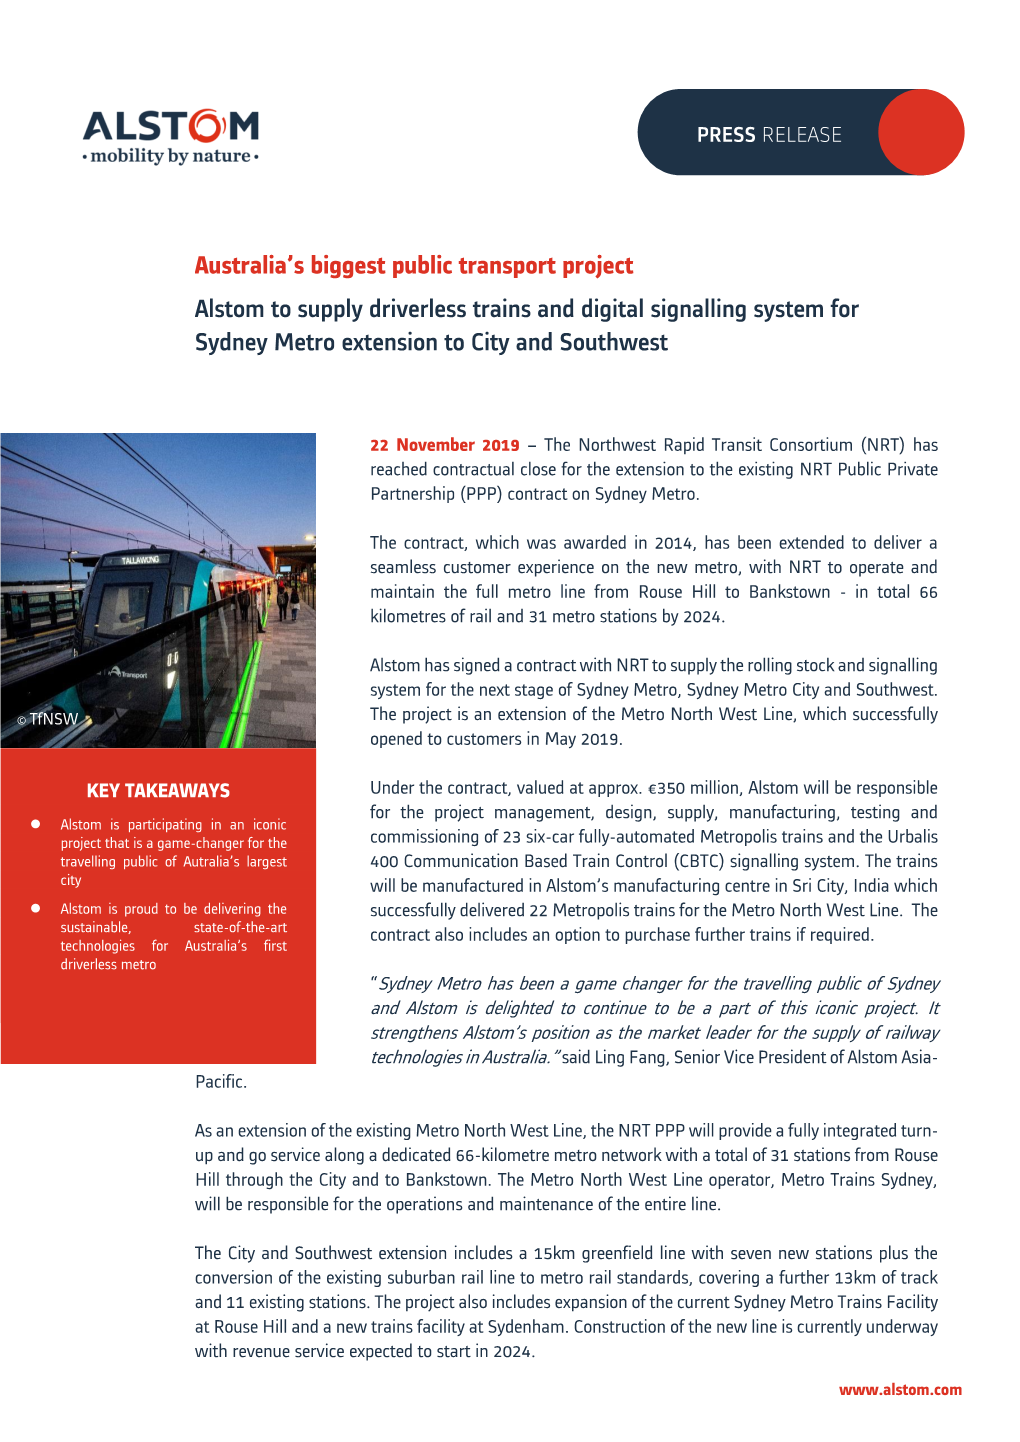 Australia's Biggest Public Transport Project Alstom to Supply Driverless